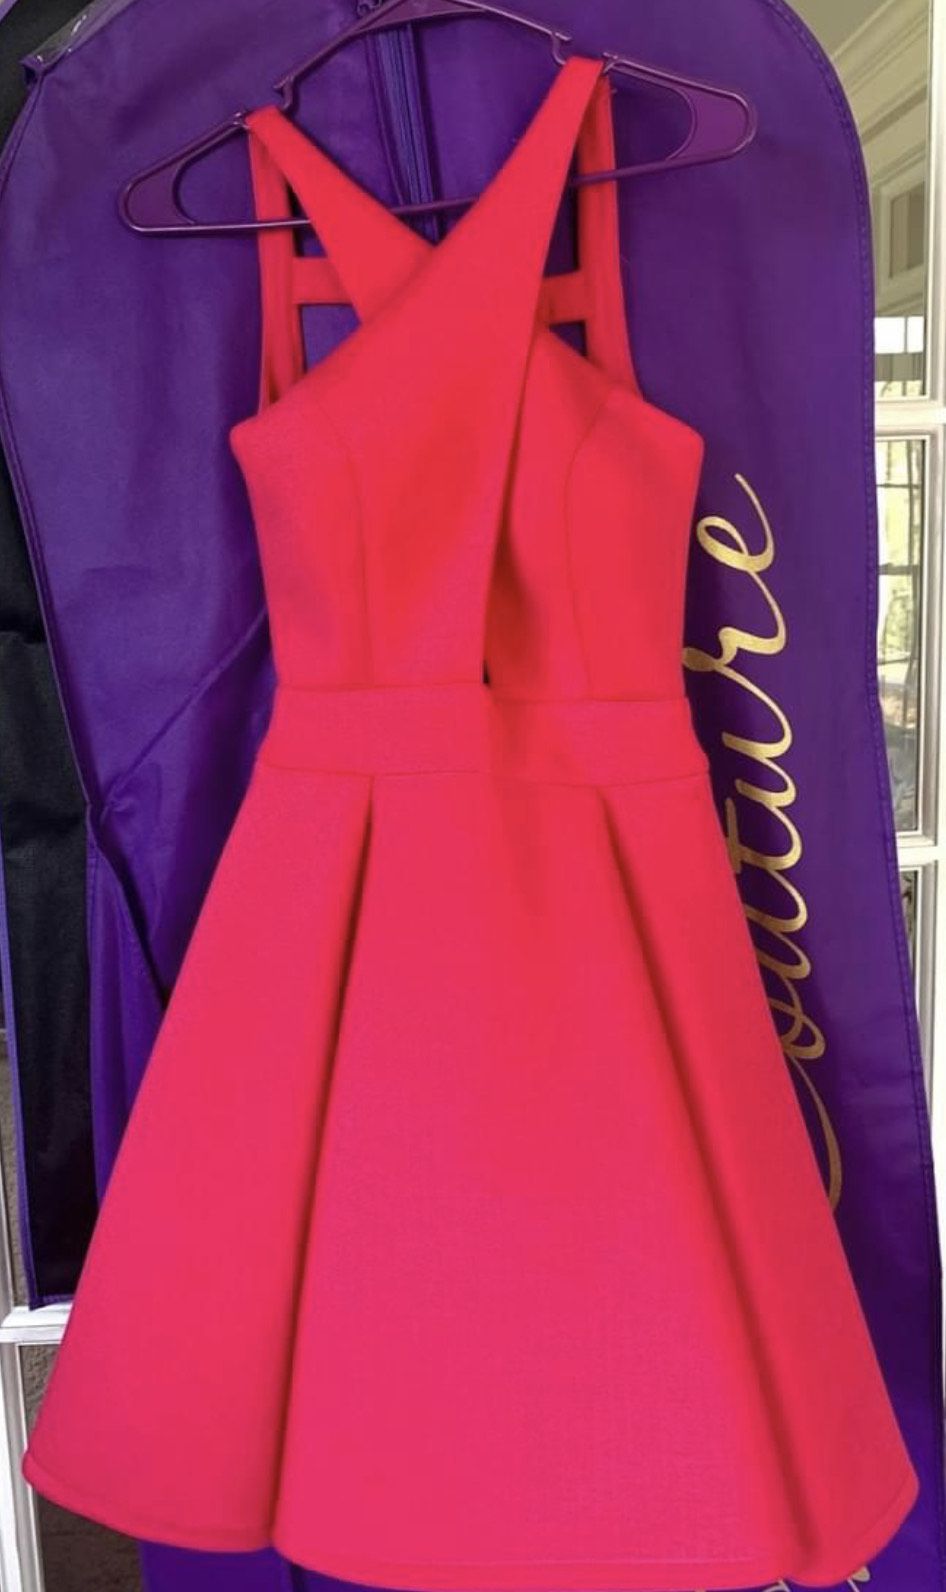 Rachel Allan Size 4 Satin Hot Pink A-line Dress on Queenly